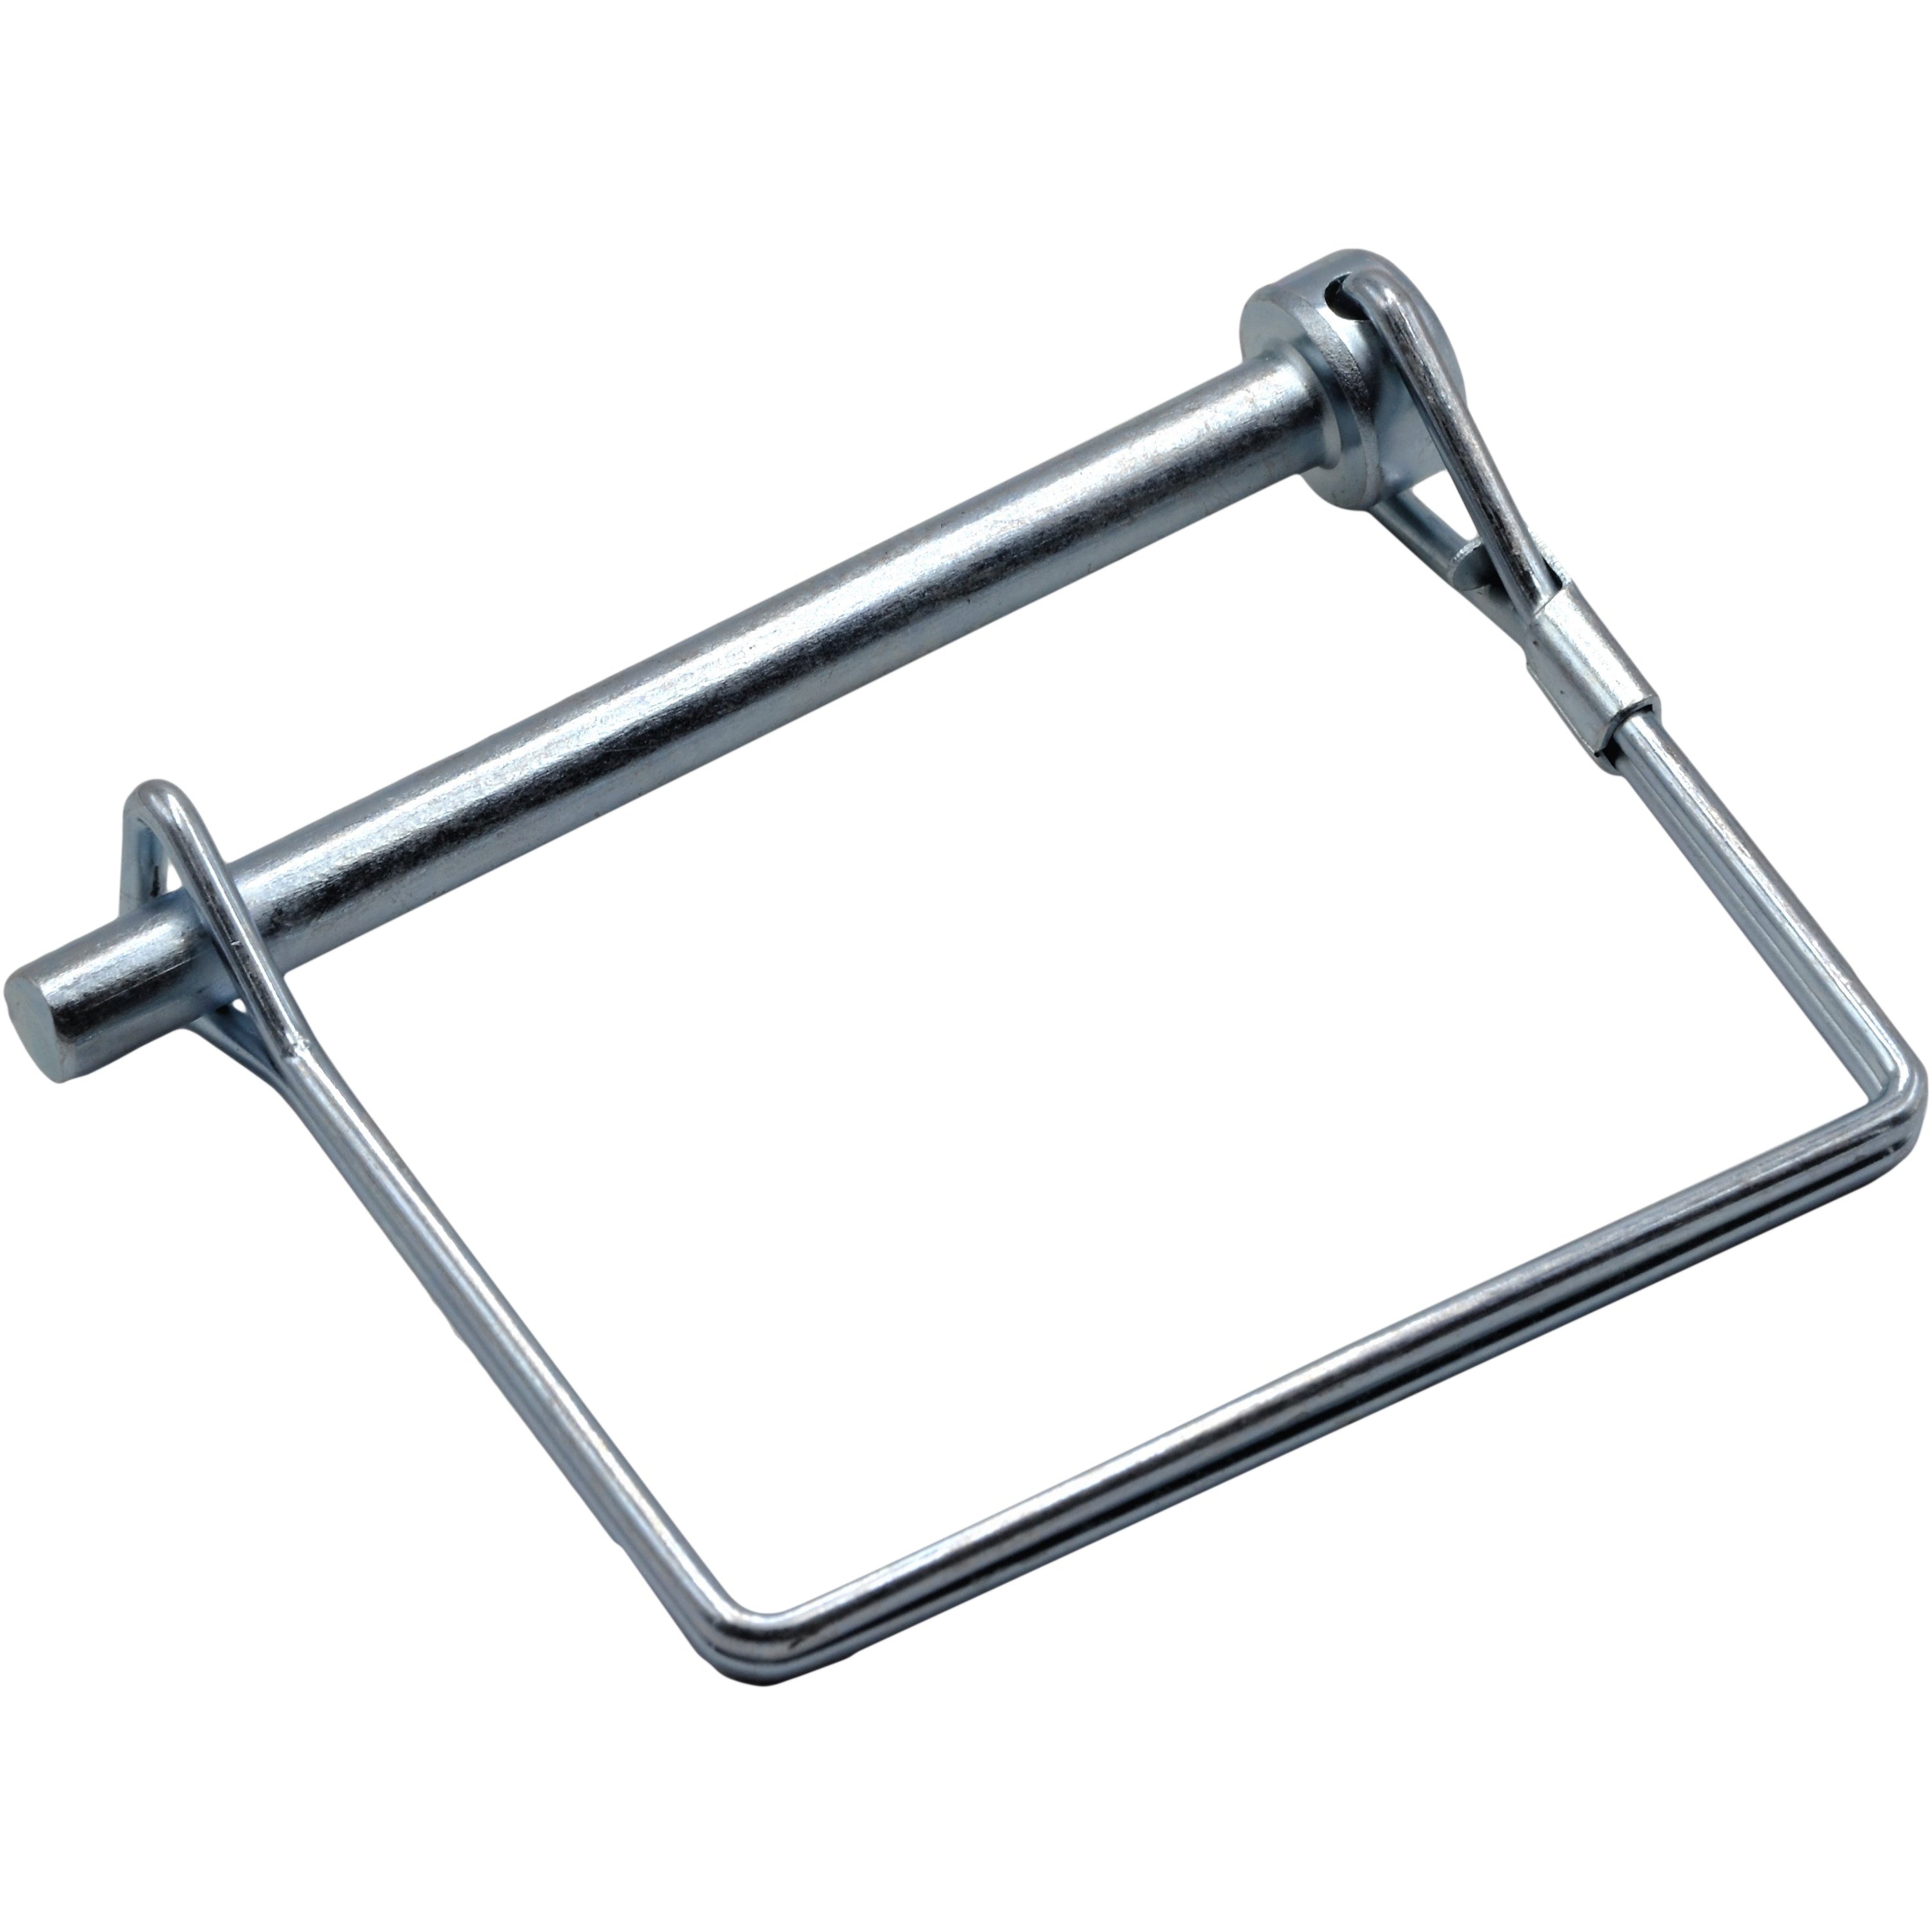 24 Pc Square Shaft Locking Lynch Pin clip grab kit assortment